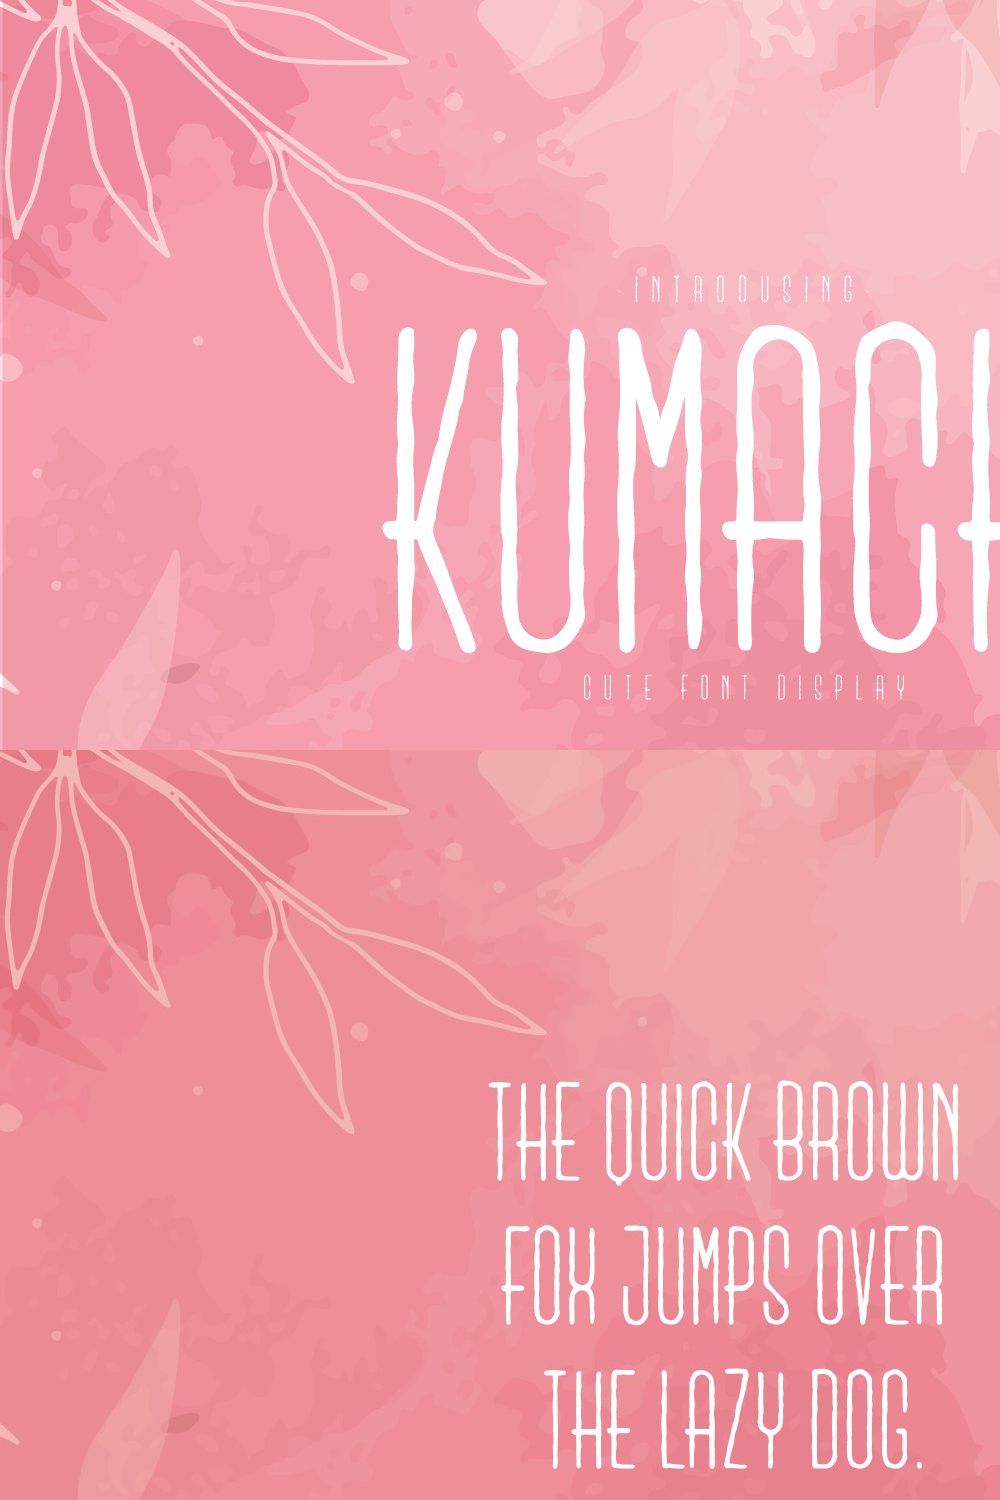 Kumachi pinterest preview image.